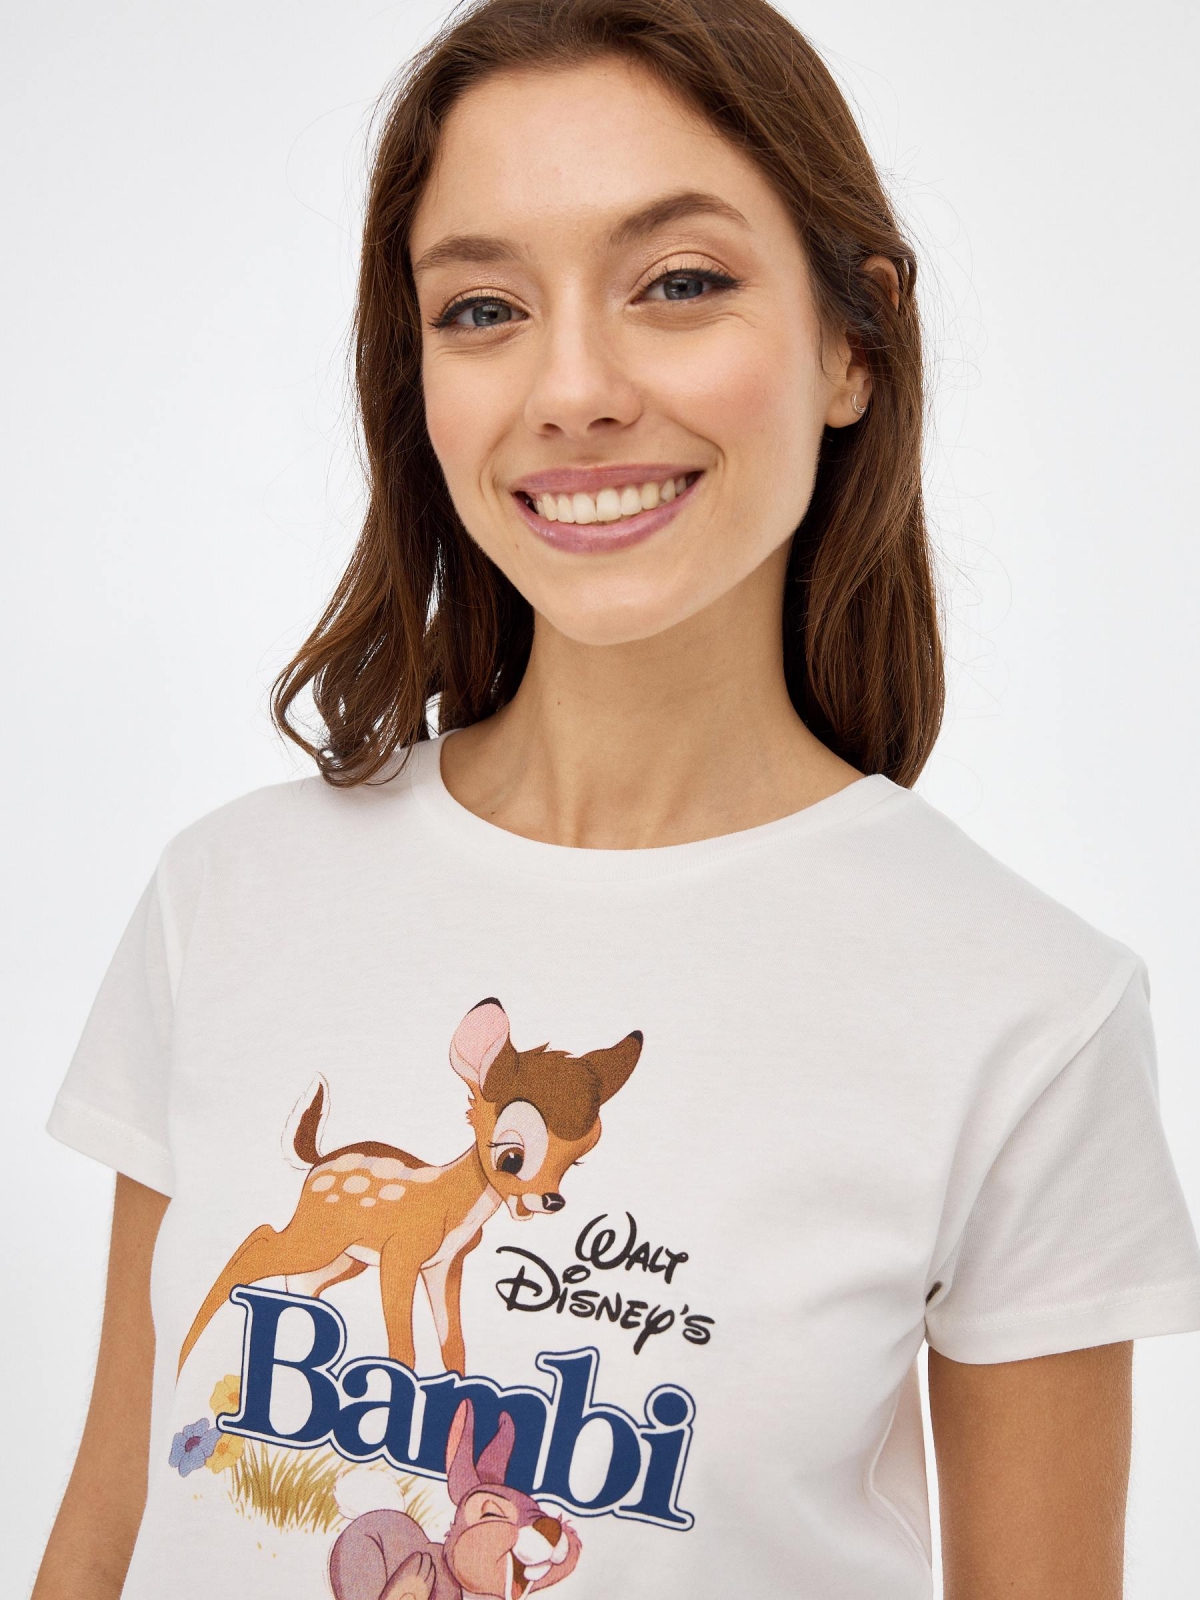  Bambi  t-shirt off white foreground